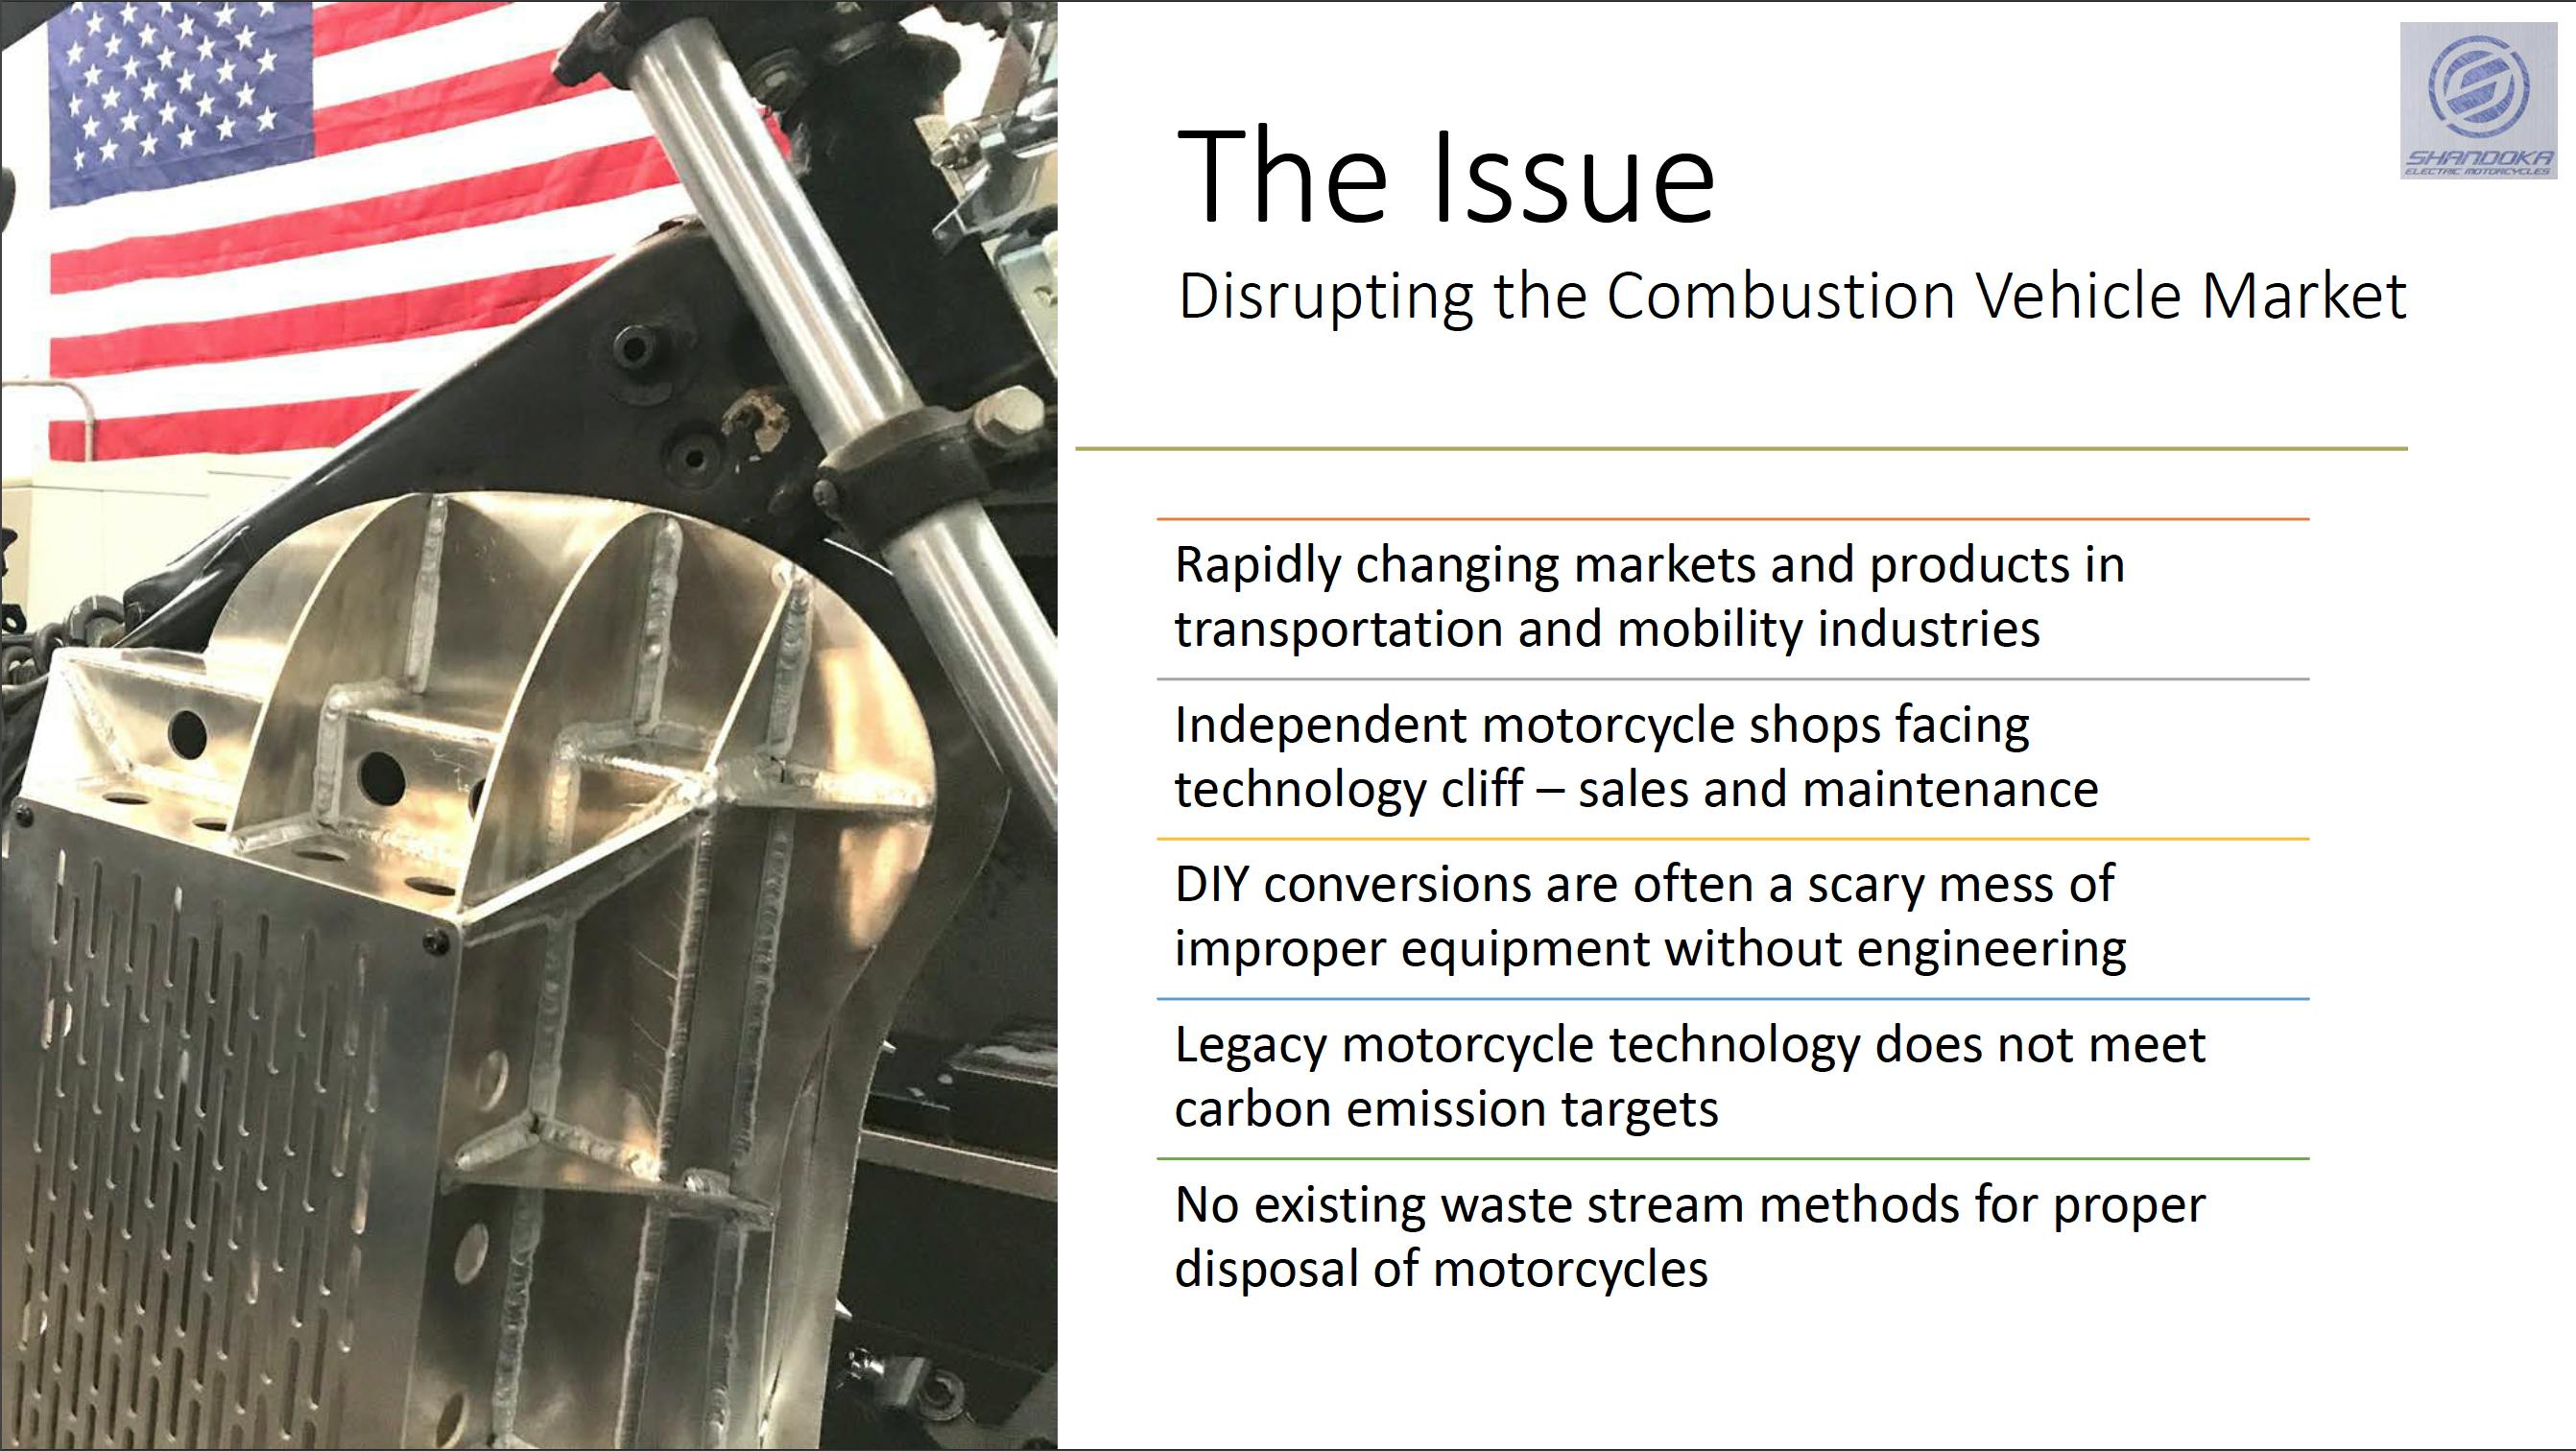 shandoka electric motorcycles will disrupt combustion motorcycles with electric conversion www.wunderfund.co/shandokacycles